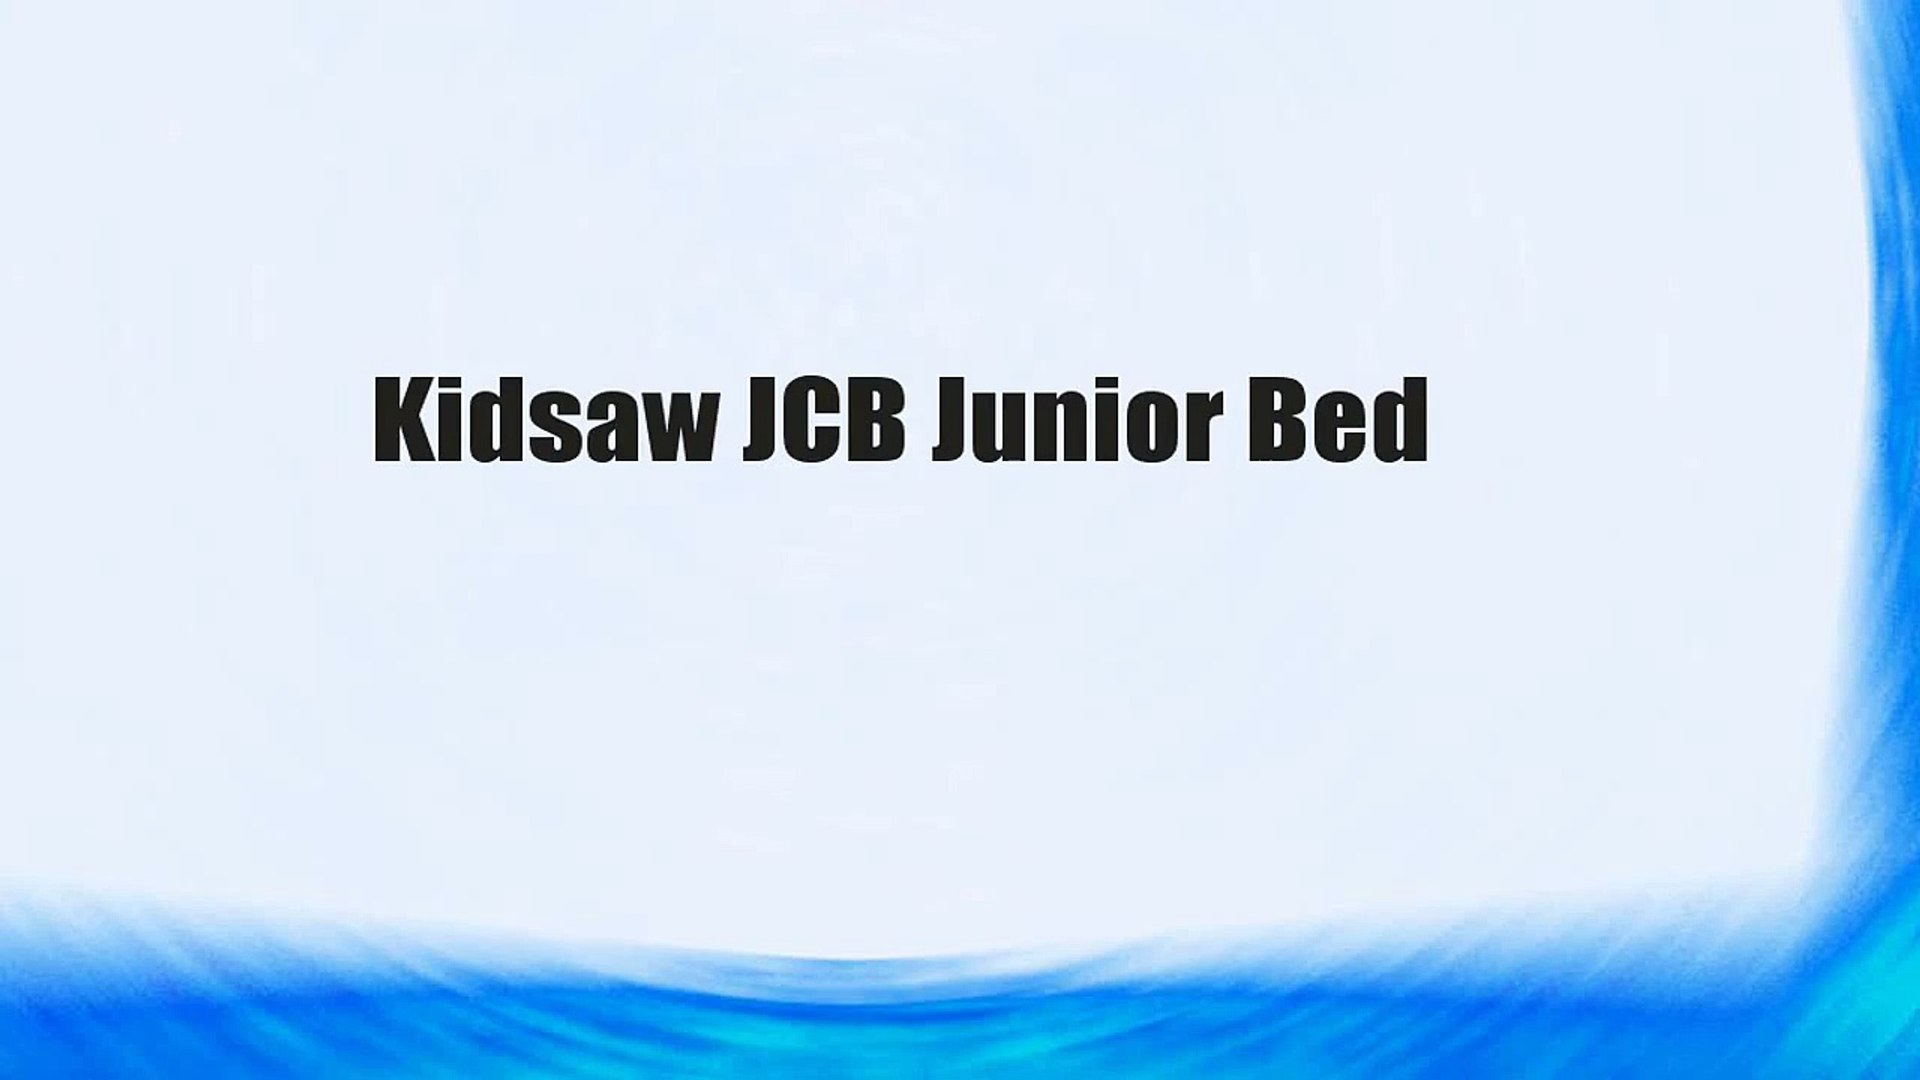 kidsaw jcb junior bed